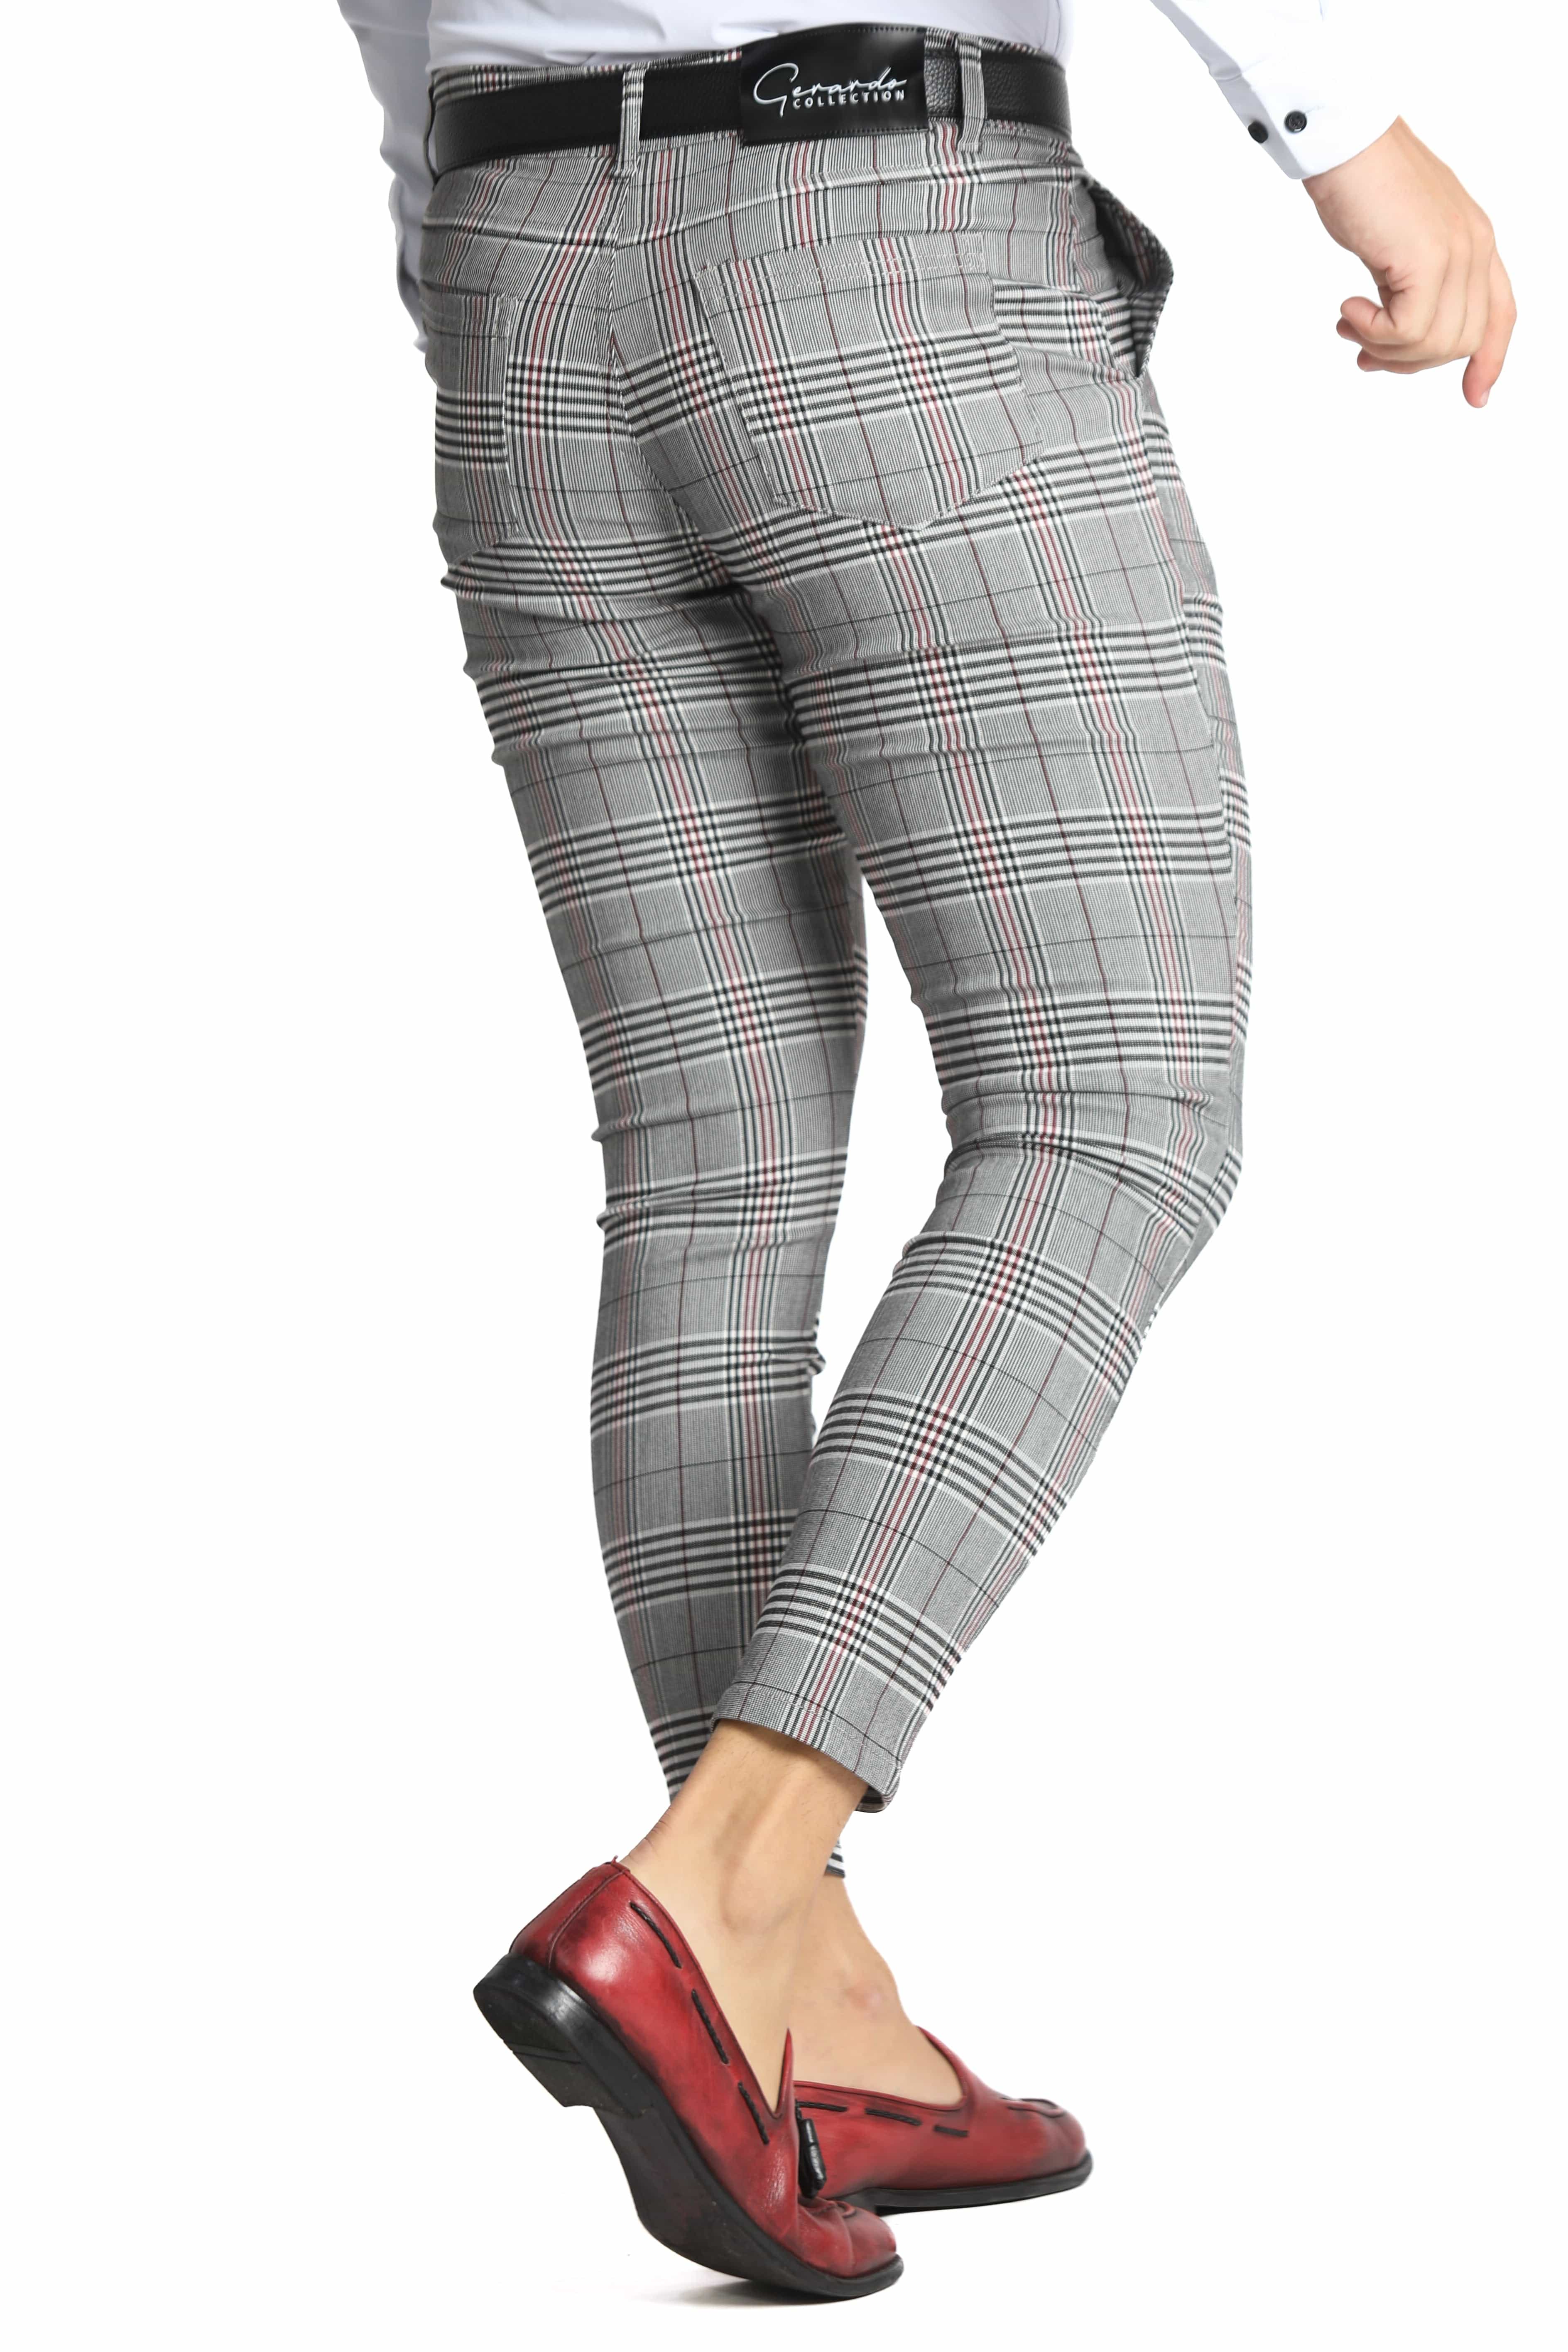 Get Dark Grey Checkered Classic Formal Pants at ₹ 1499 | LBB Shop